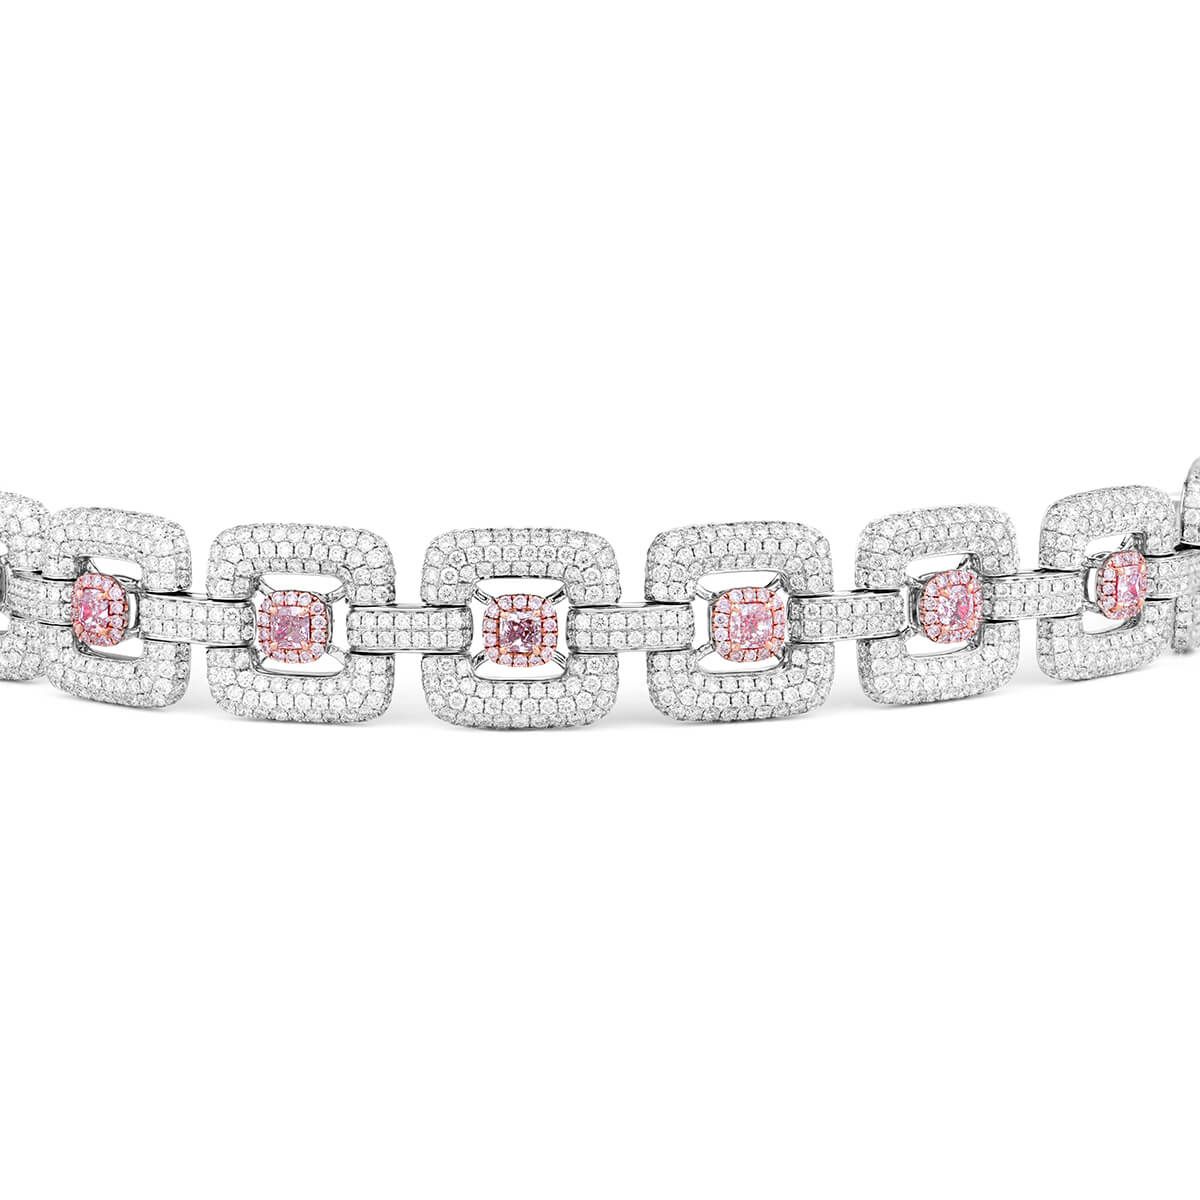 Very Light Pink Diamond Bracelet, 15.06 Ct. TW, Radiant shape, GIA Certified, JCBF05403948